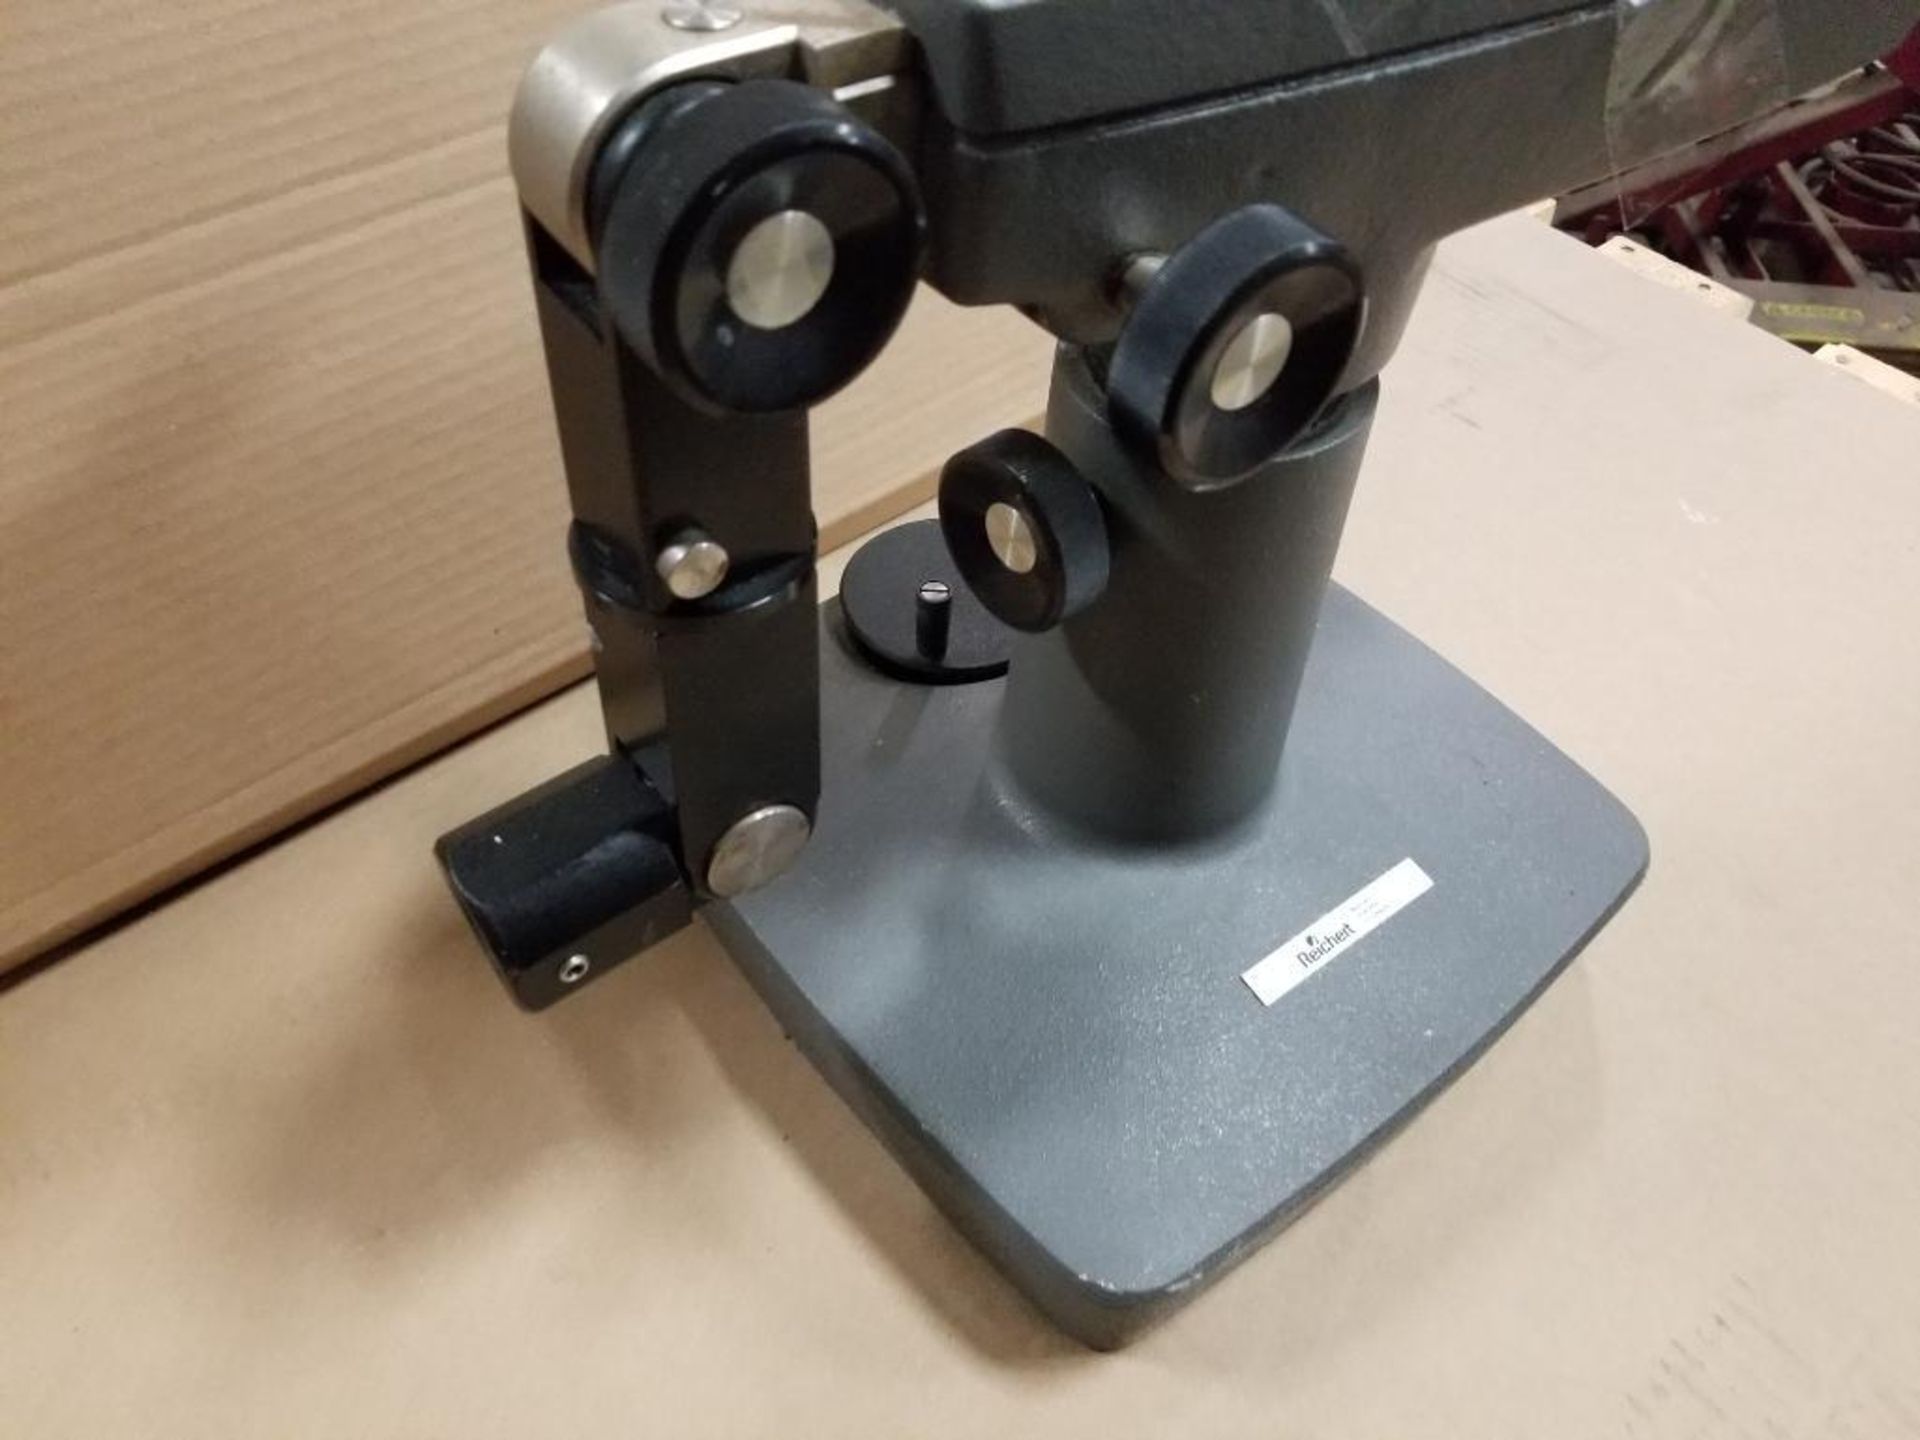 Reichert Scientific Instruments microscope stand. - Image 4 of 6